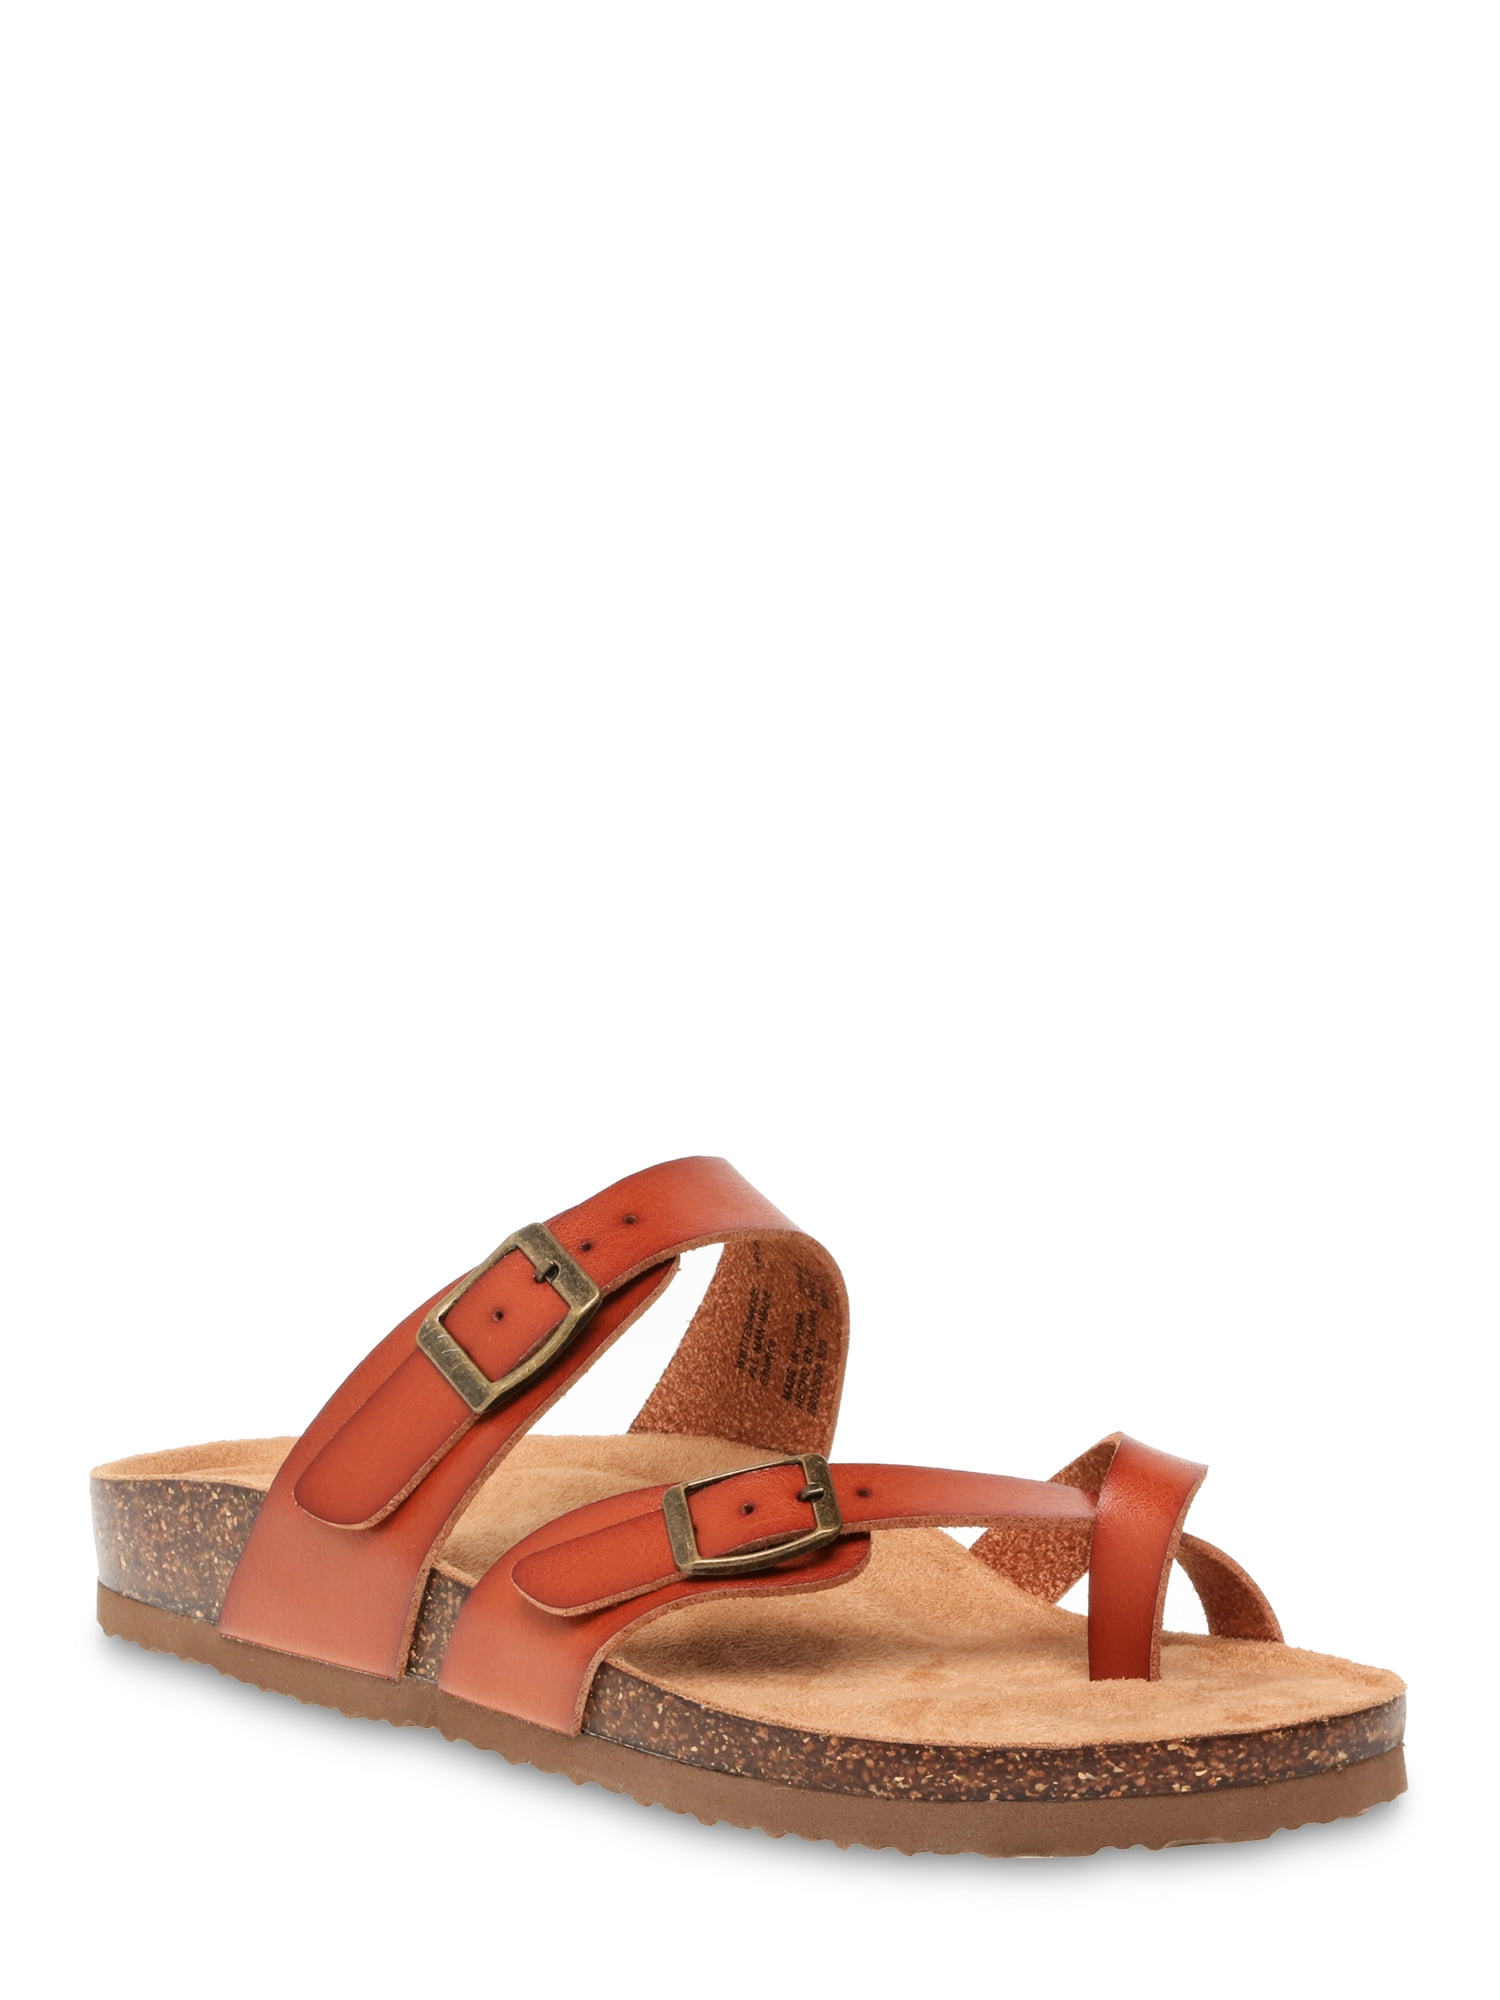 Womens Thong Gladiator Flat Sandals Strappy Cork Sole Summer Slides